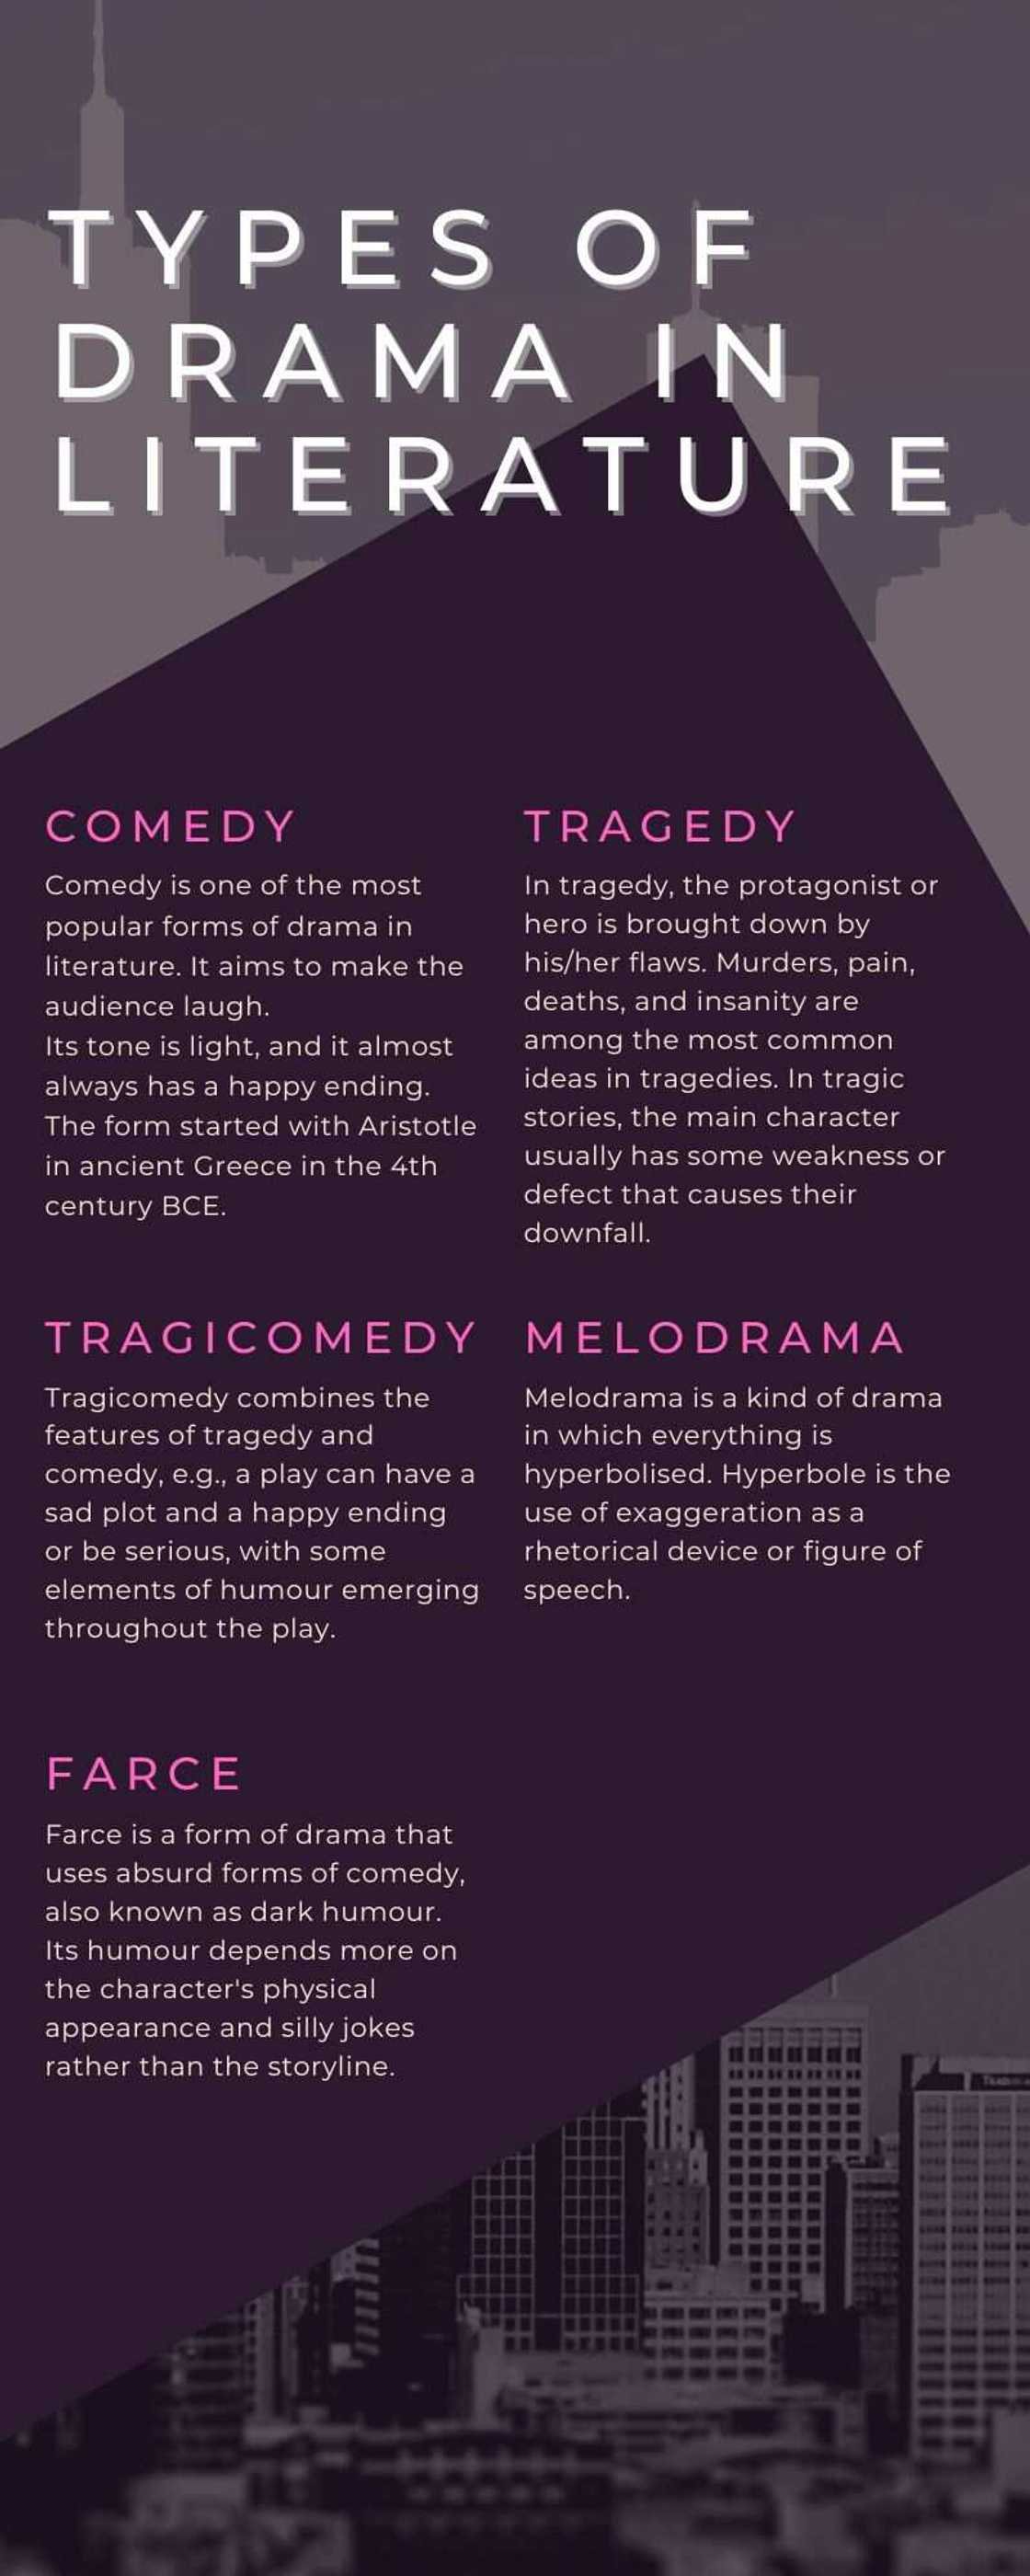 Types of drama in literature